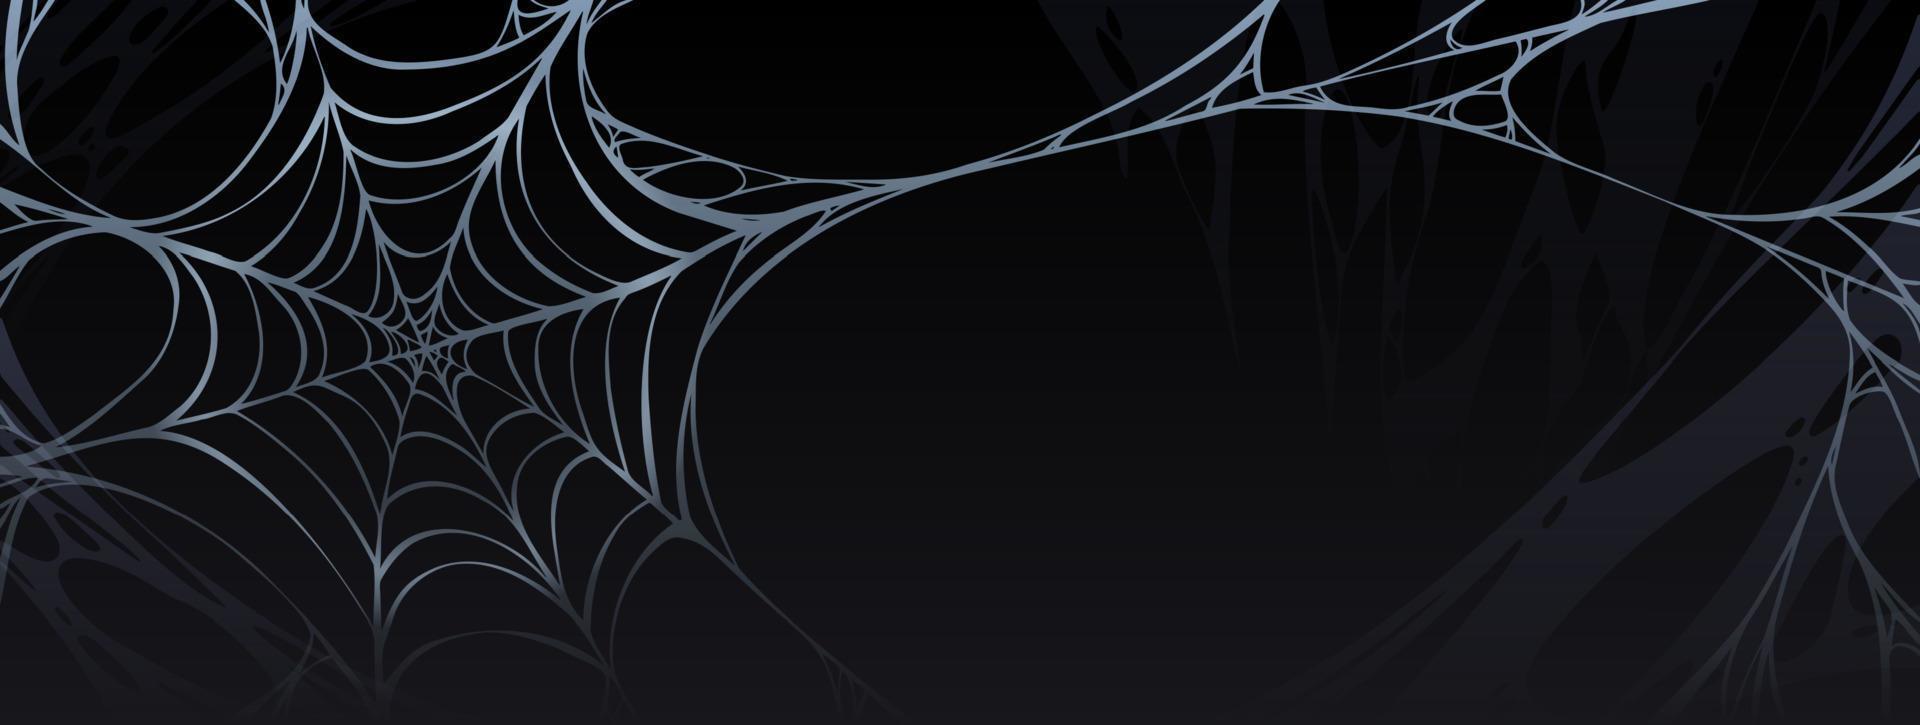 läskigt halloween affisch med Spindel webb vektor